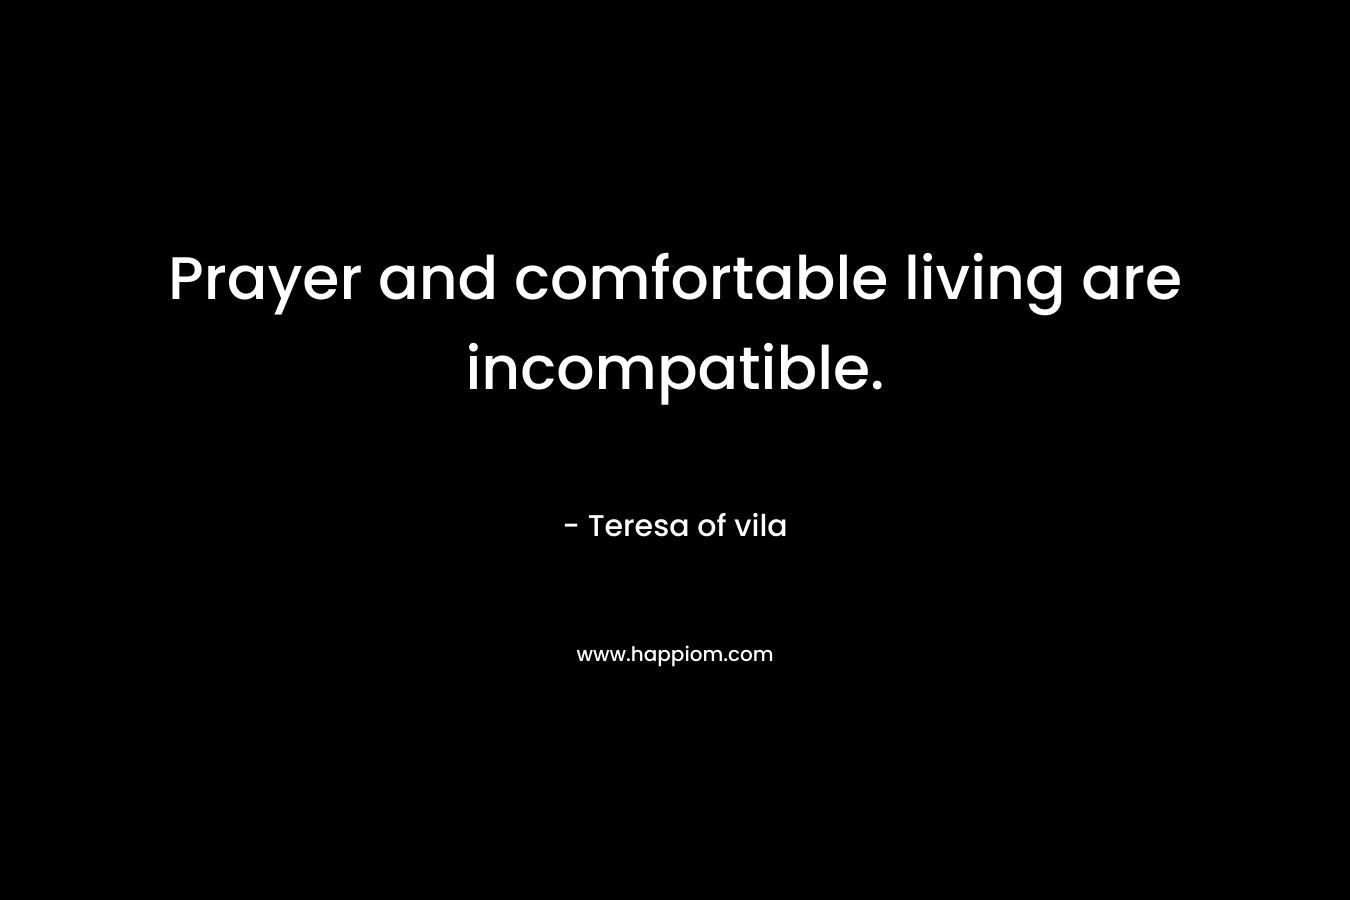 Prayer and comfortable living are incompatible. – Teresa of vila